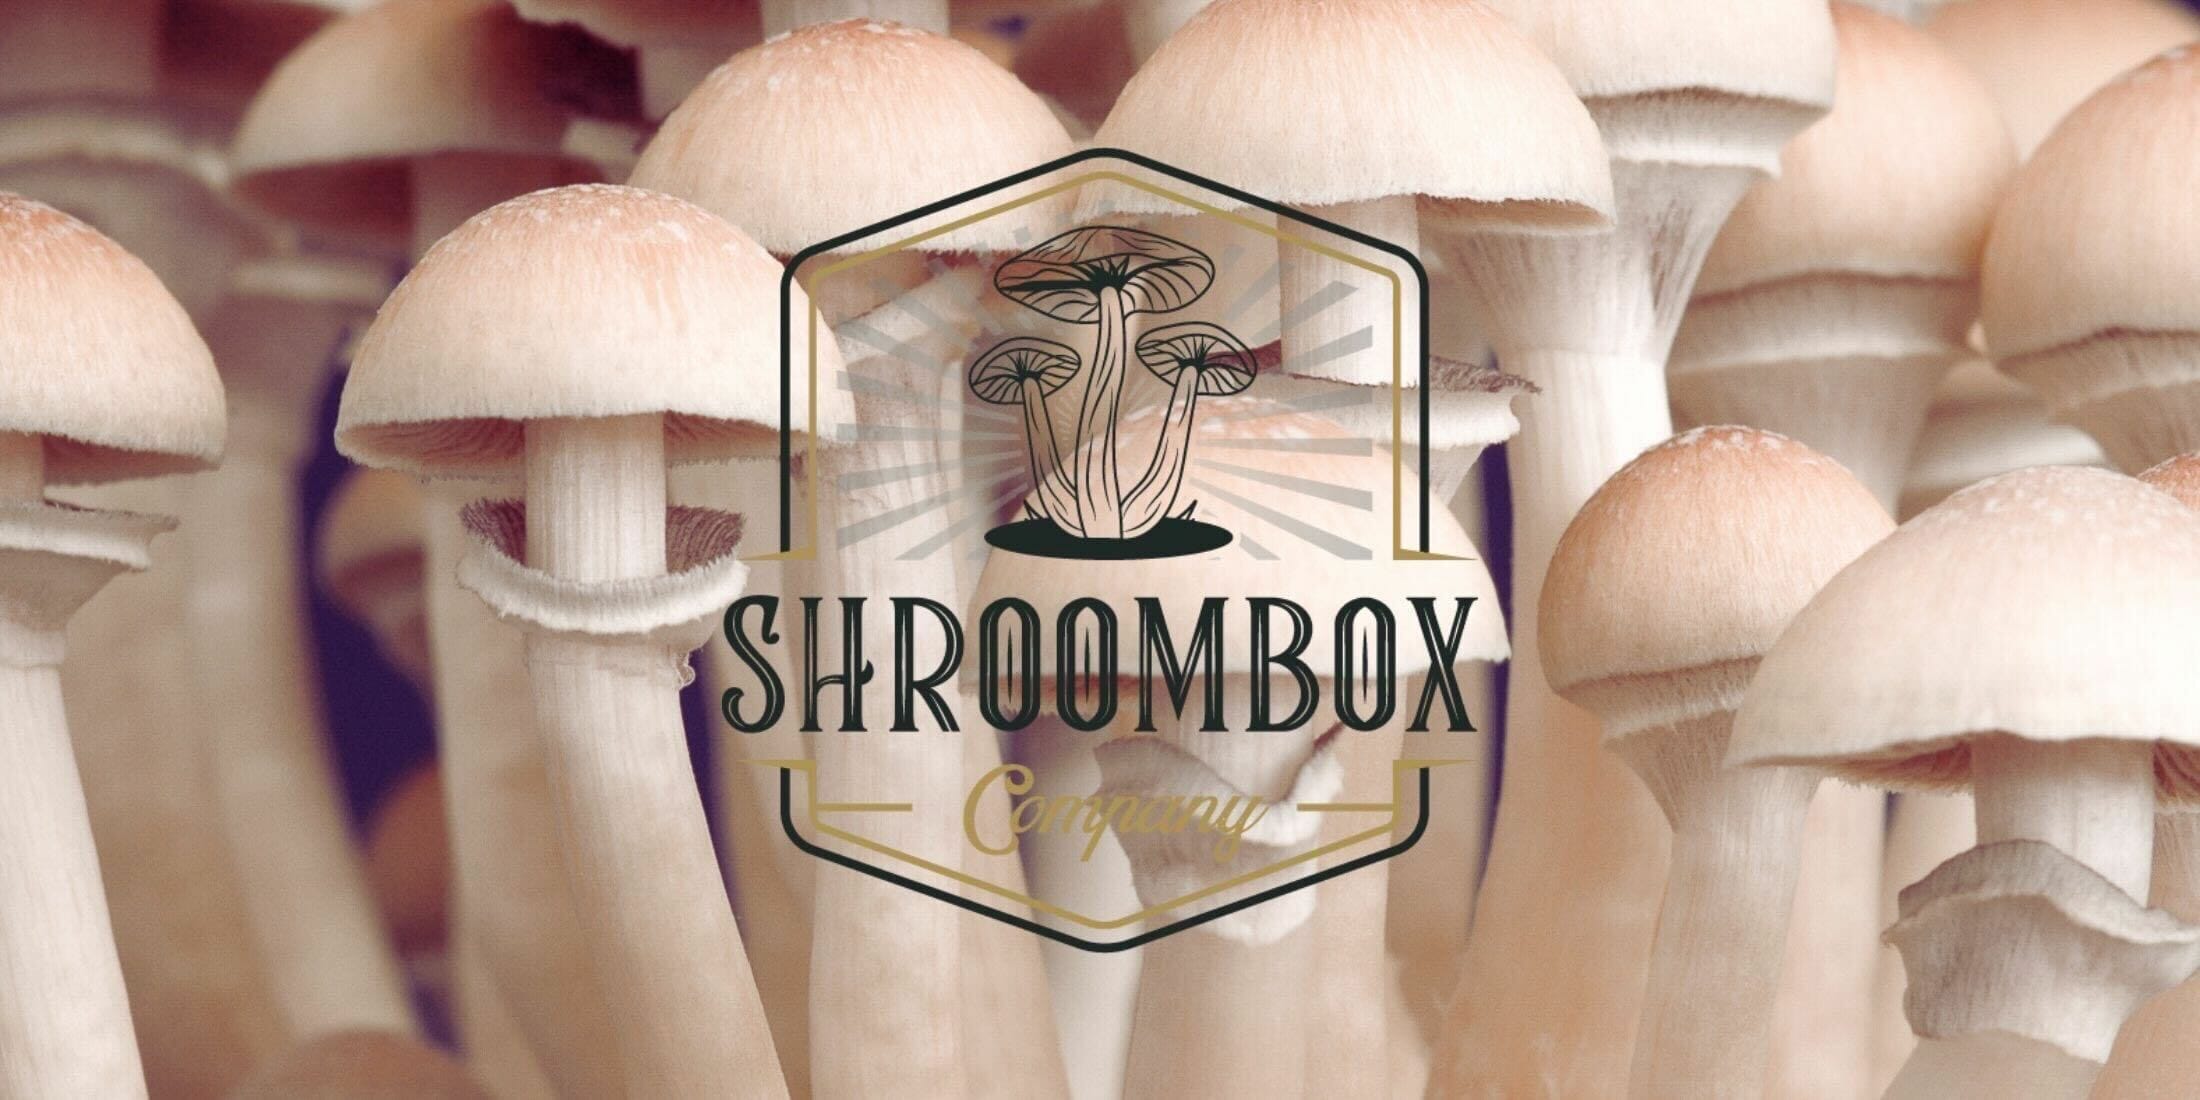 Shroom Box logo